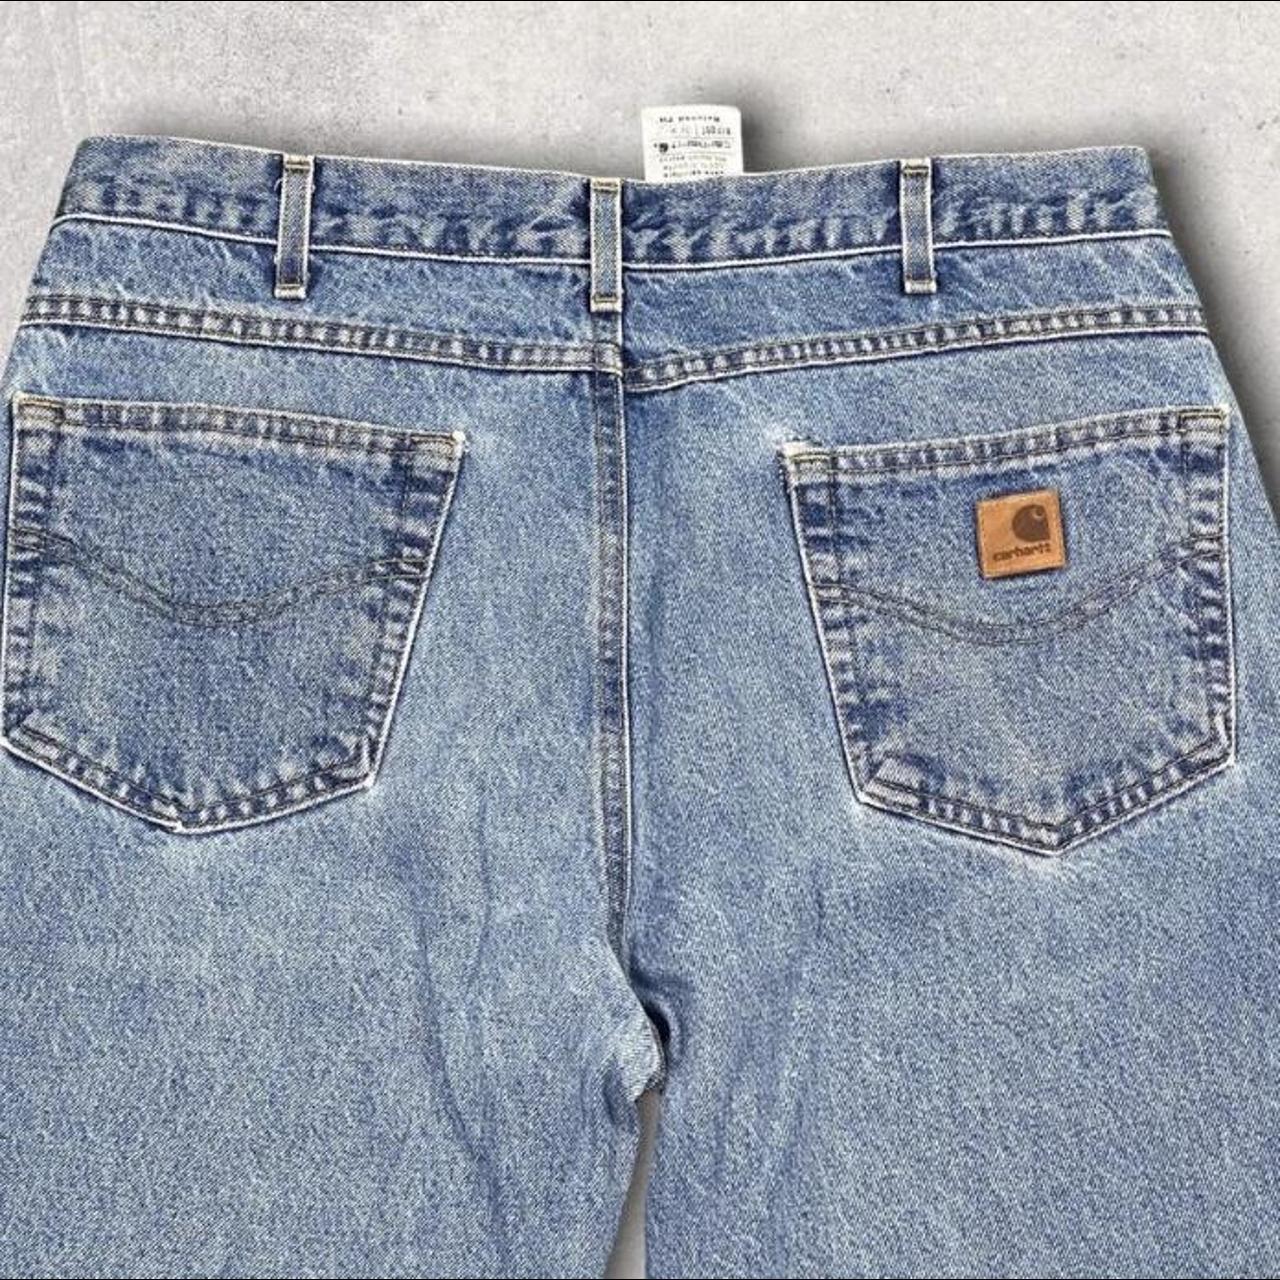 Baggy Carharrt denim jeans 36W 30L - Depop